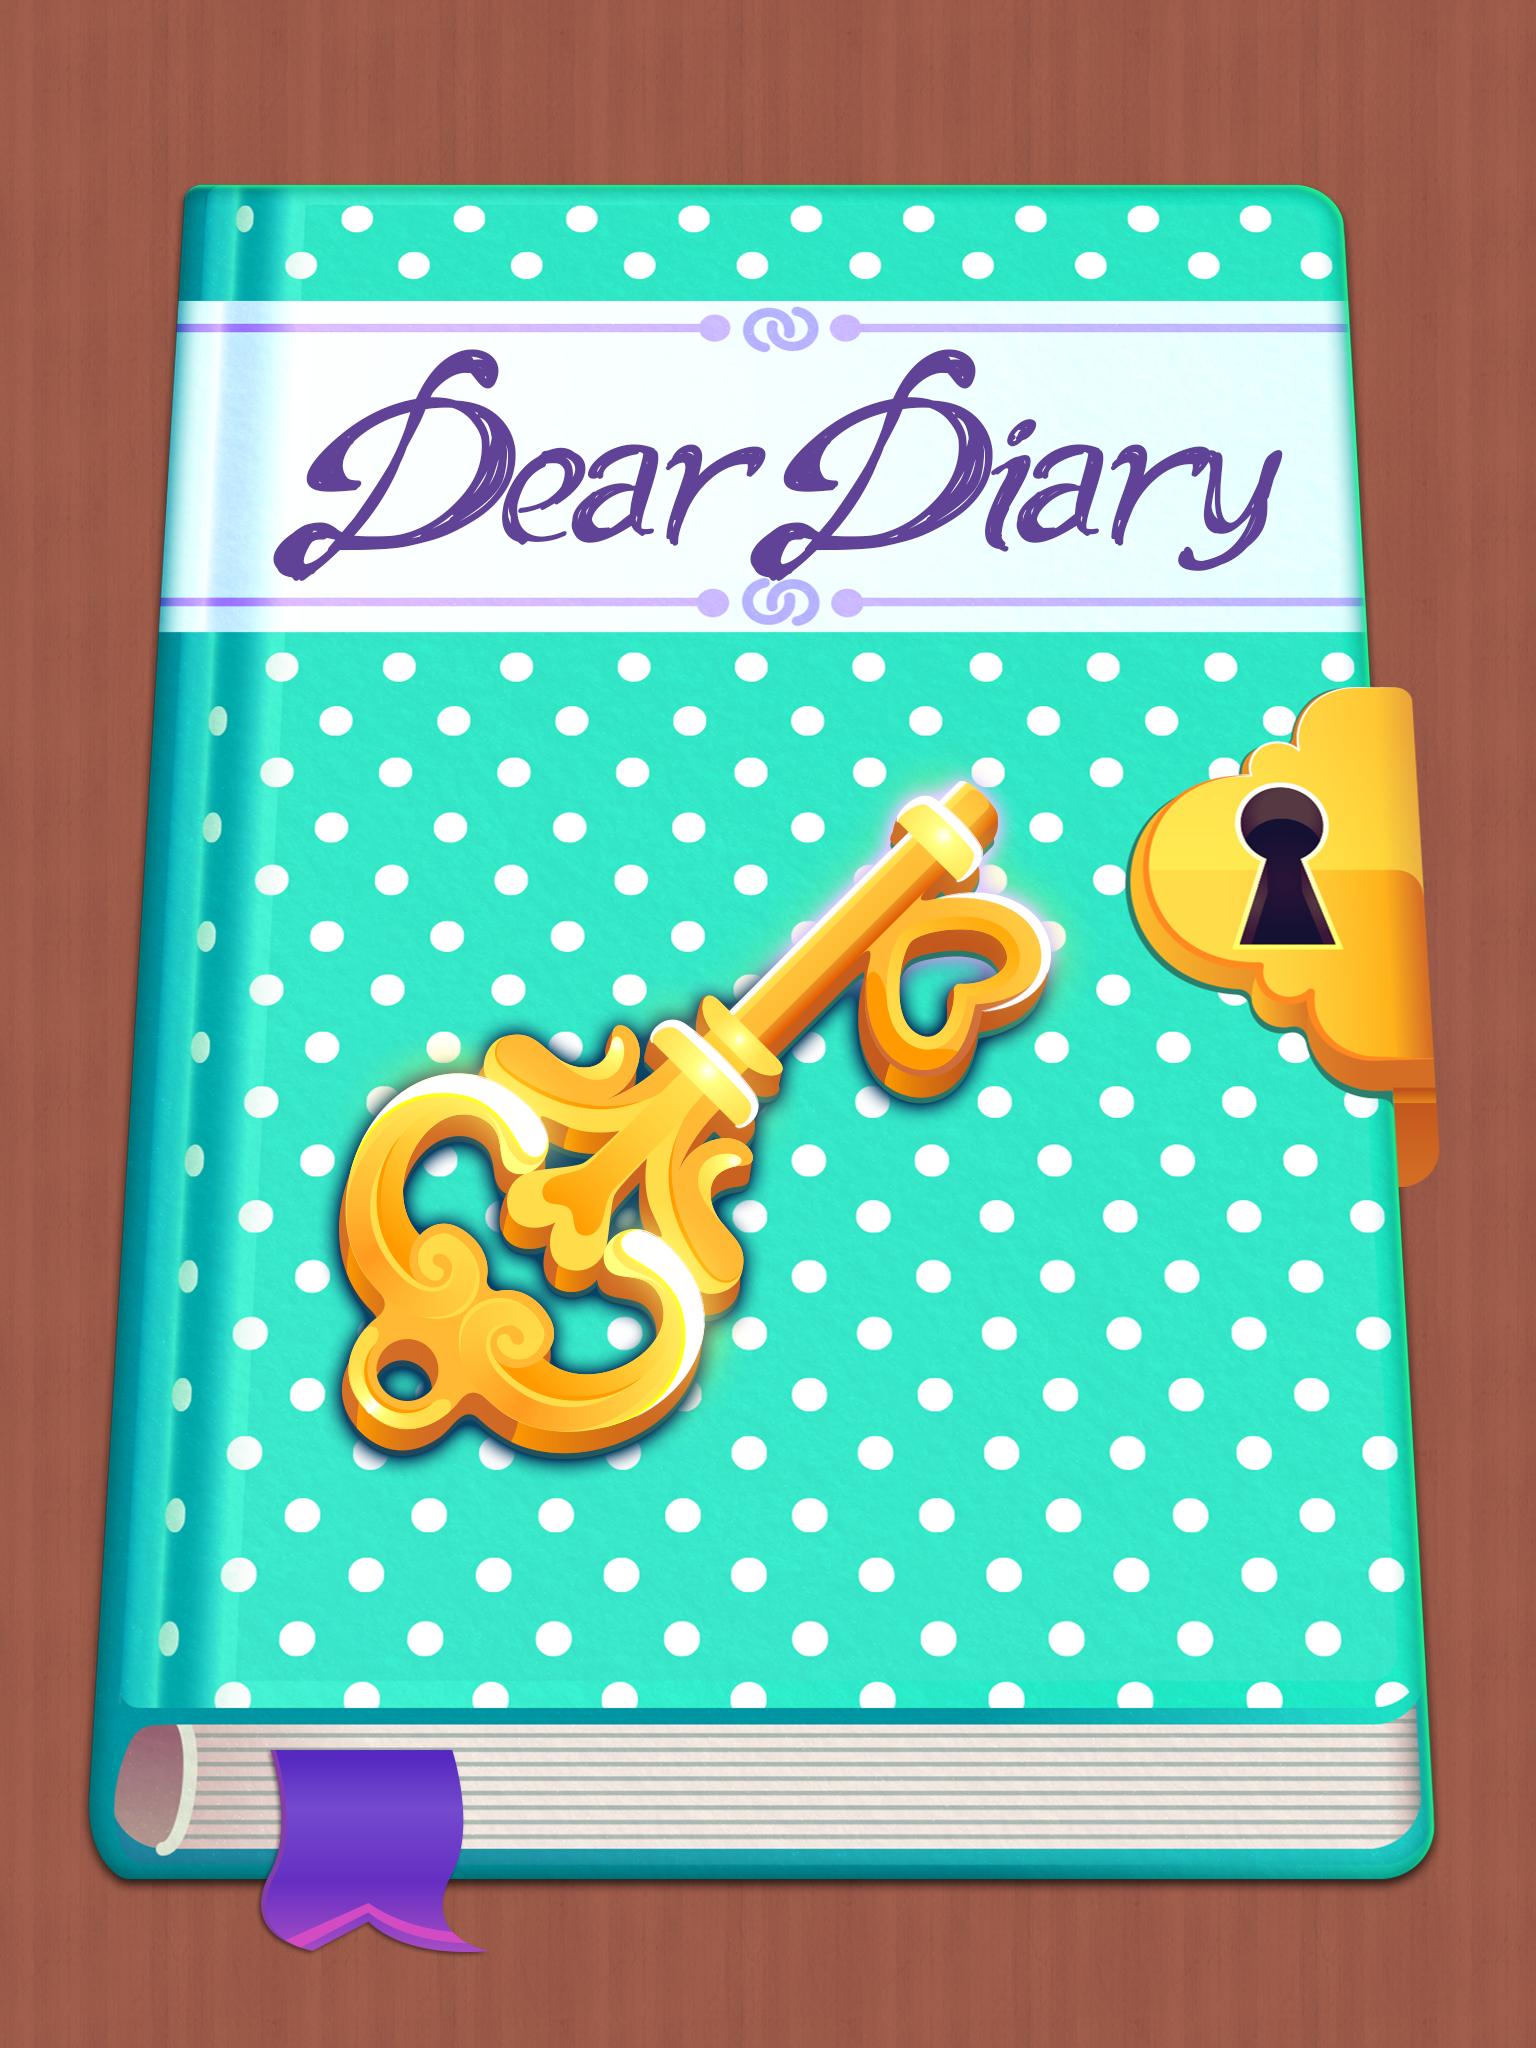 Dear Diary Teen Interactive Story Game 1.4.8 Screenshot 10